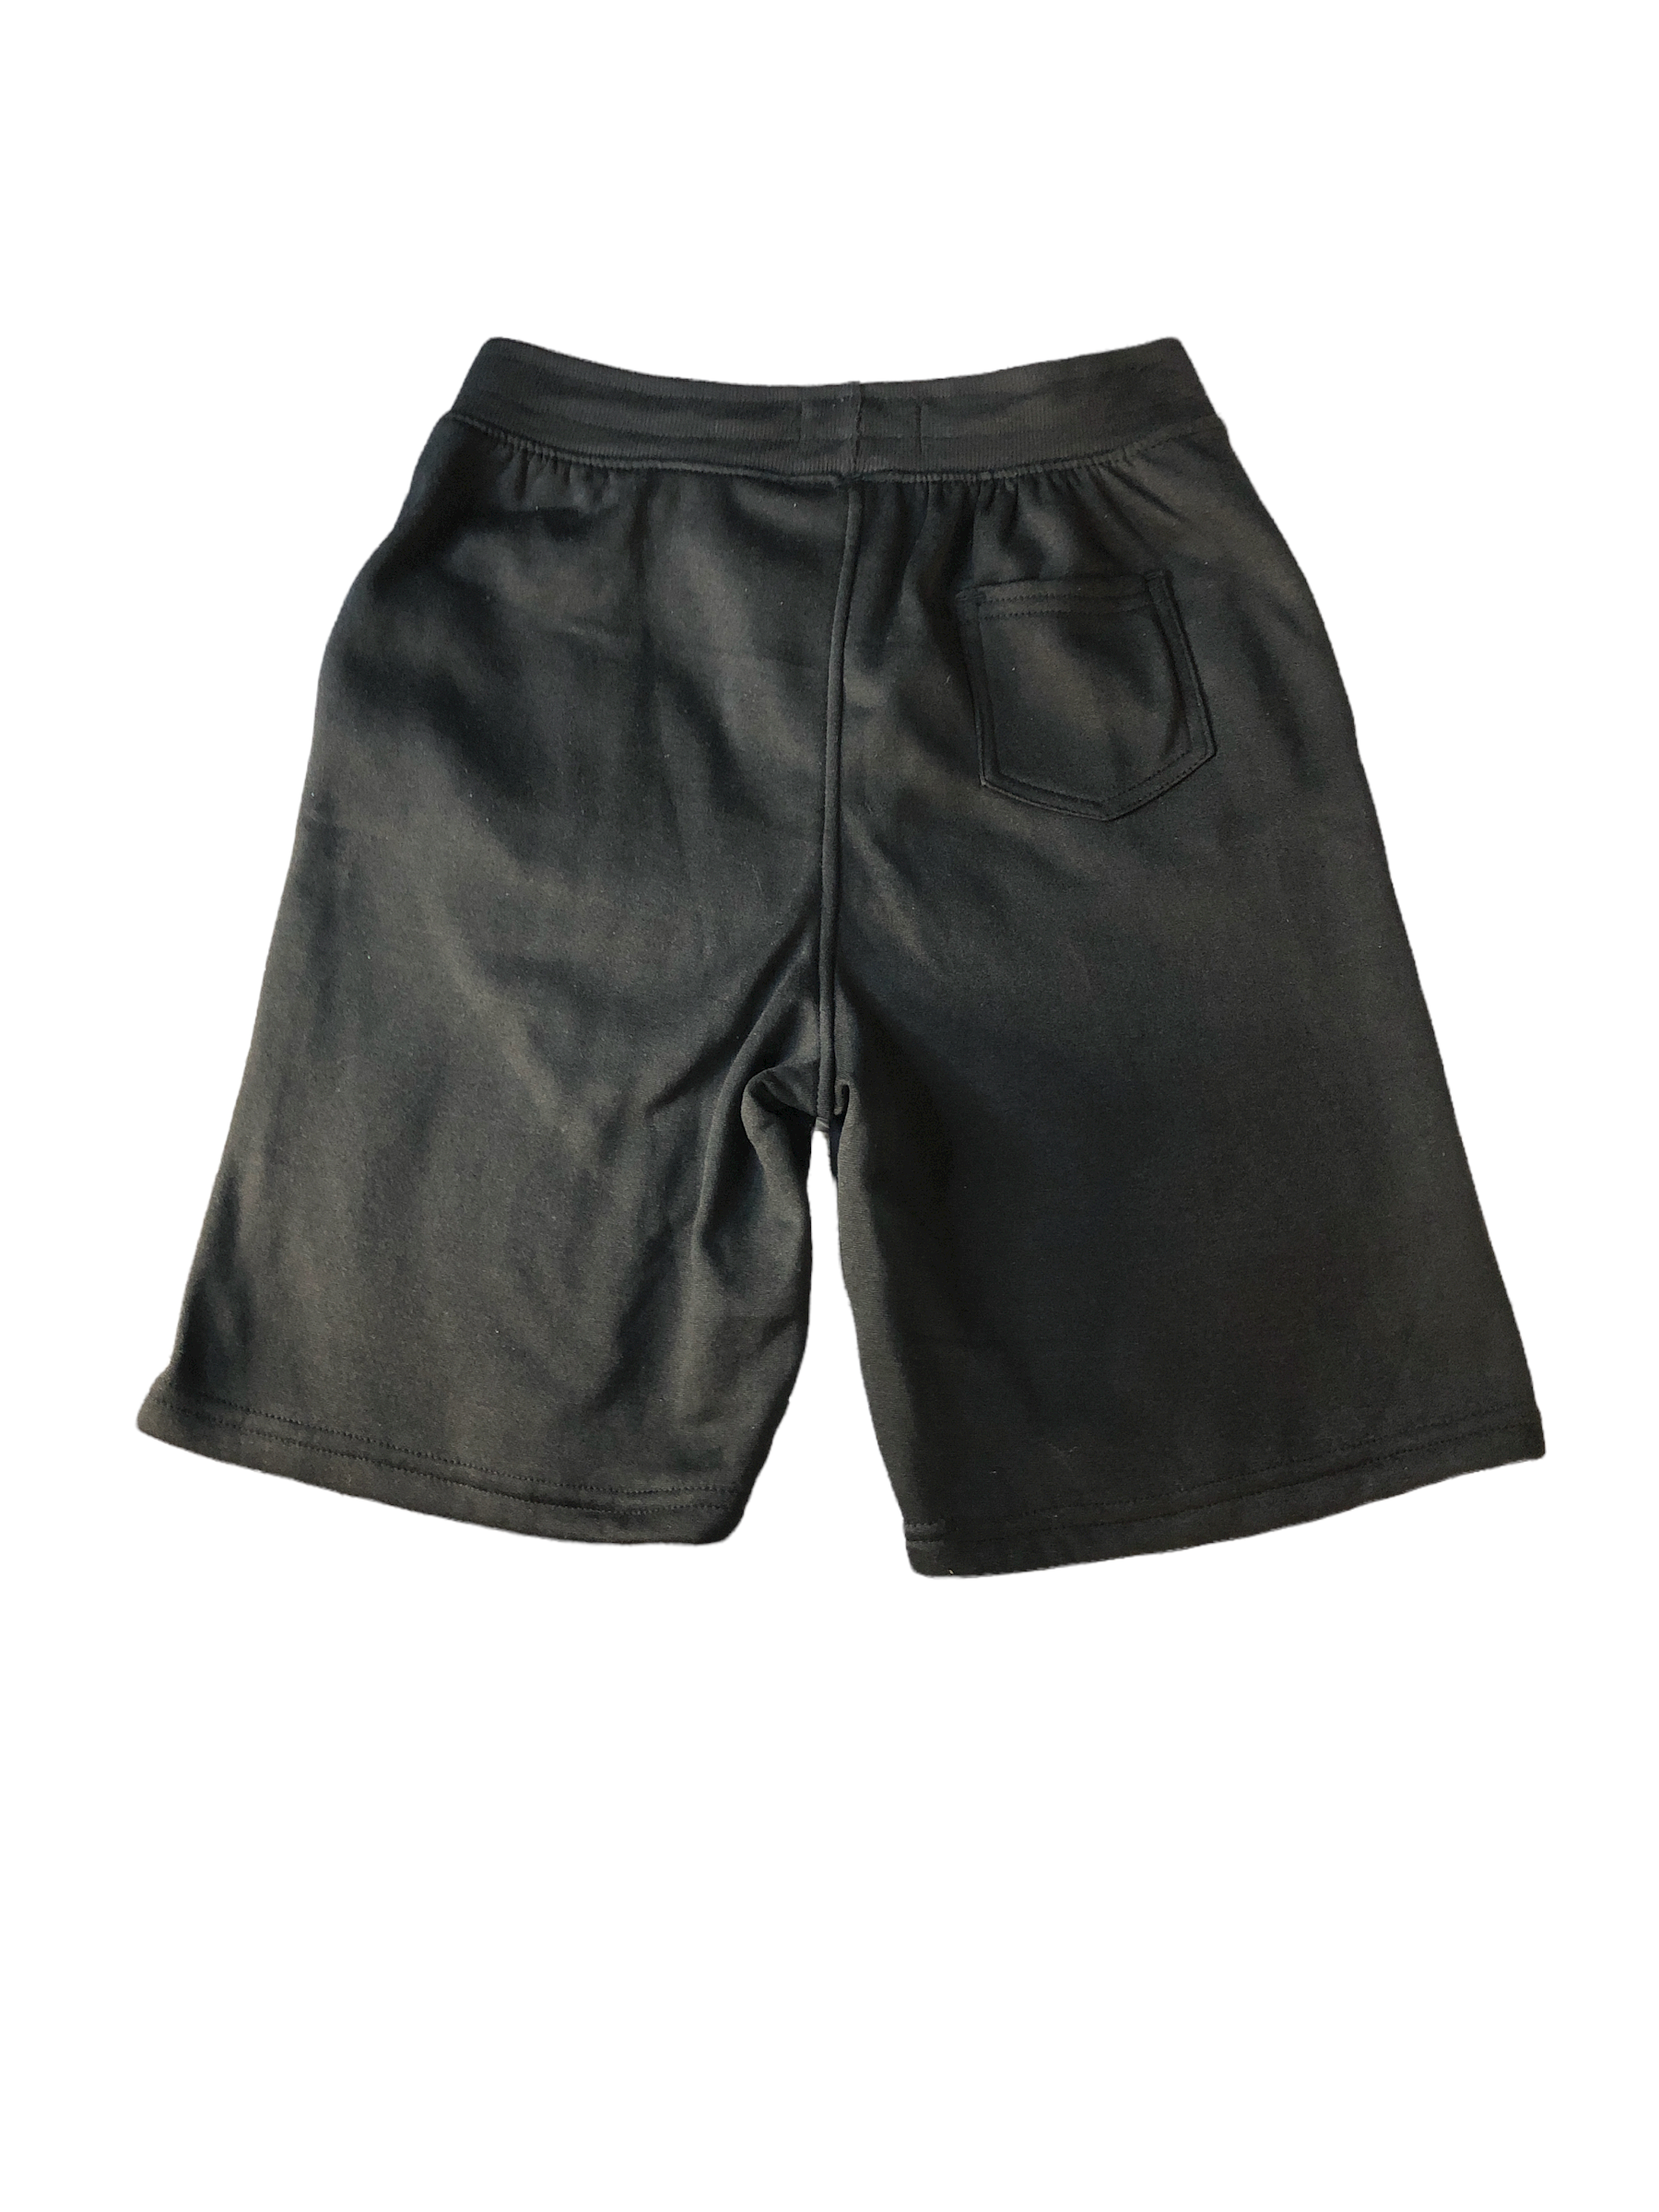 Boy’s Sweat Shorts - Variety Sales Etc.